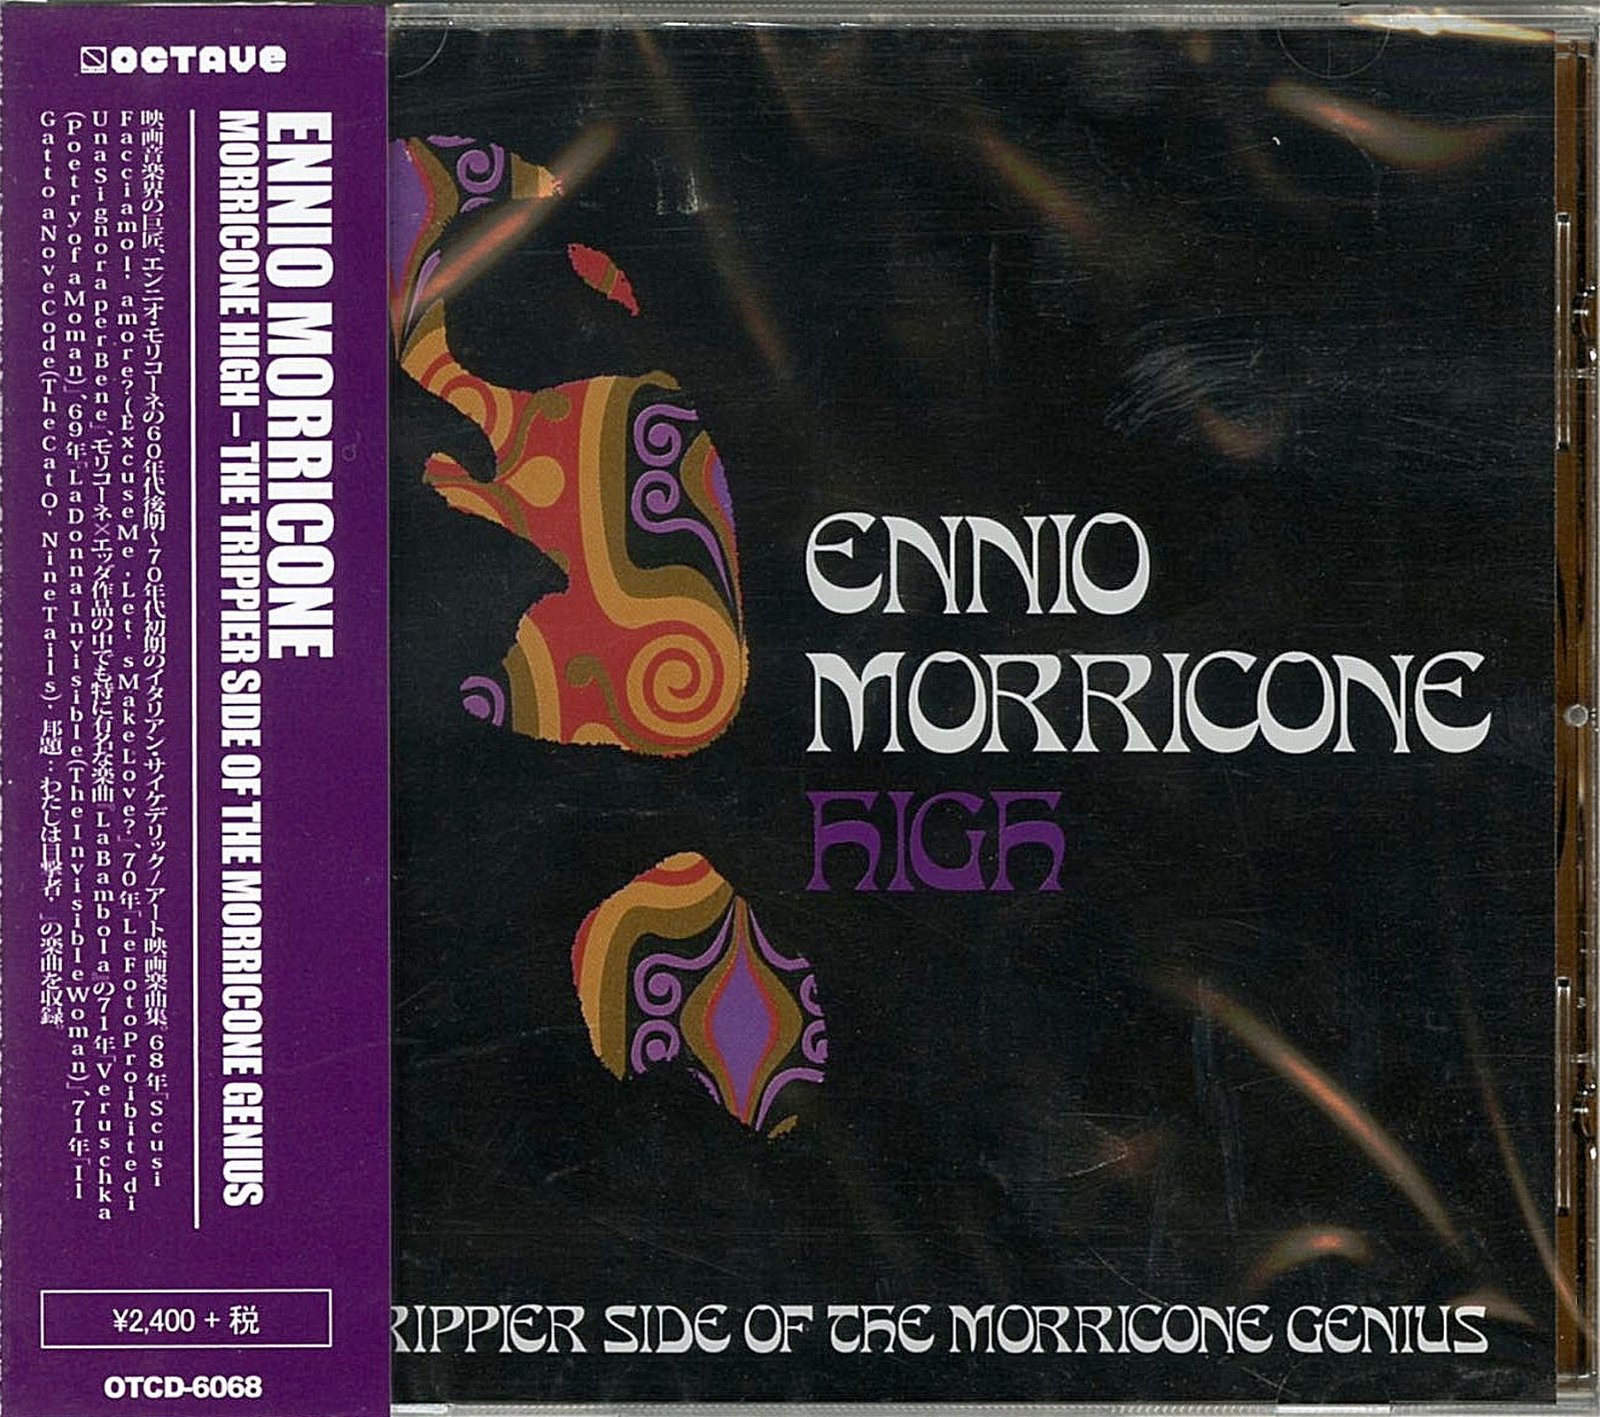 CD Shop - MORRICONE, ENNIO MORRICONE HIGH -THE TRIPPIER SIDE OF THE MORRICONE GENIUS